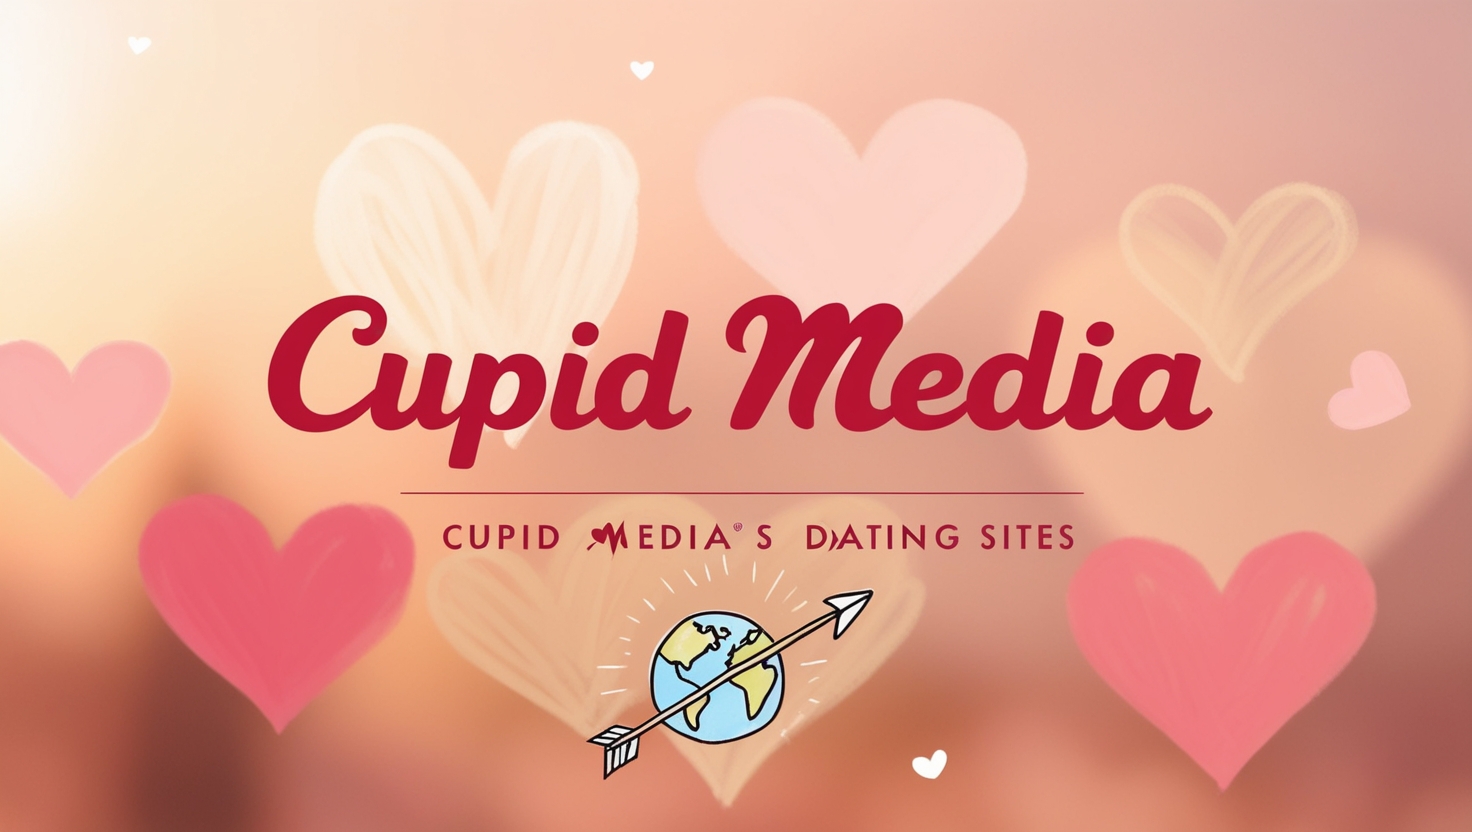 List Of Cupid Media’s Dating Sites